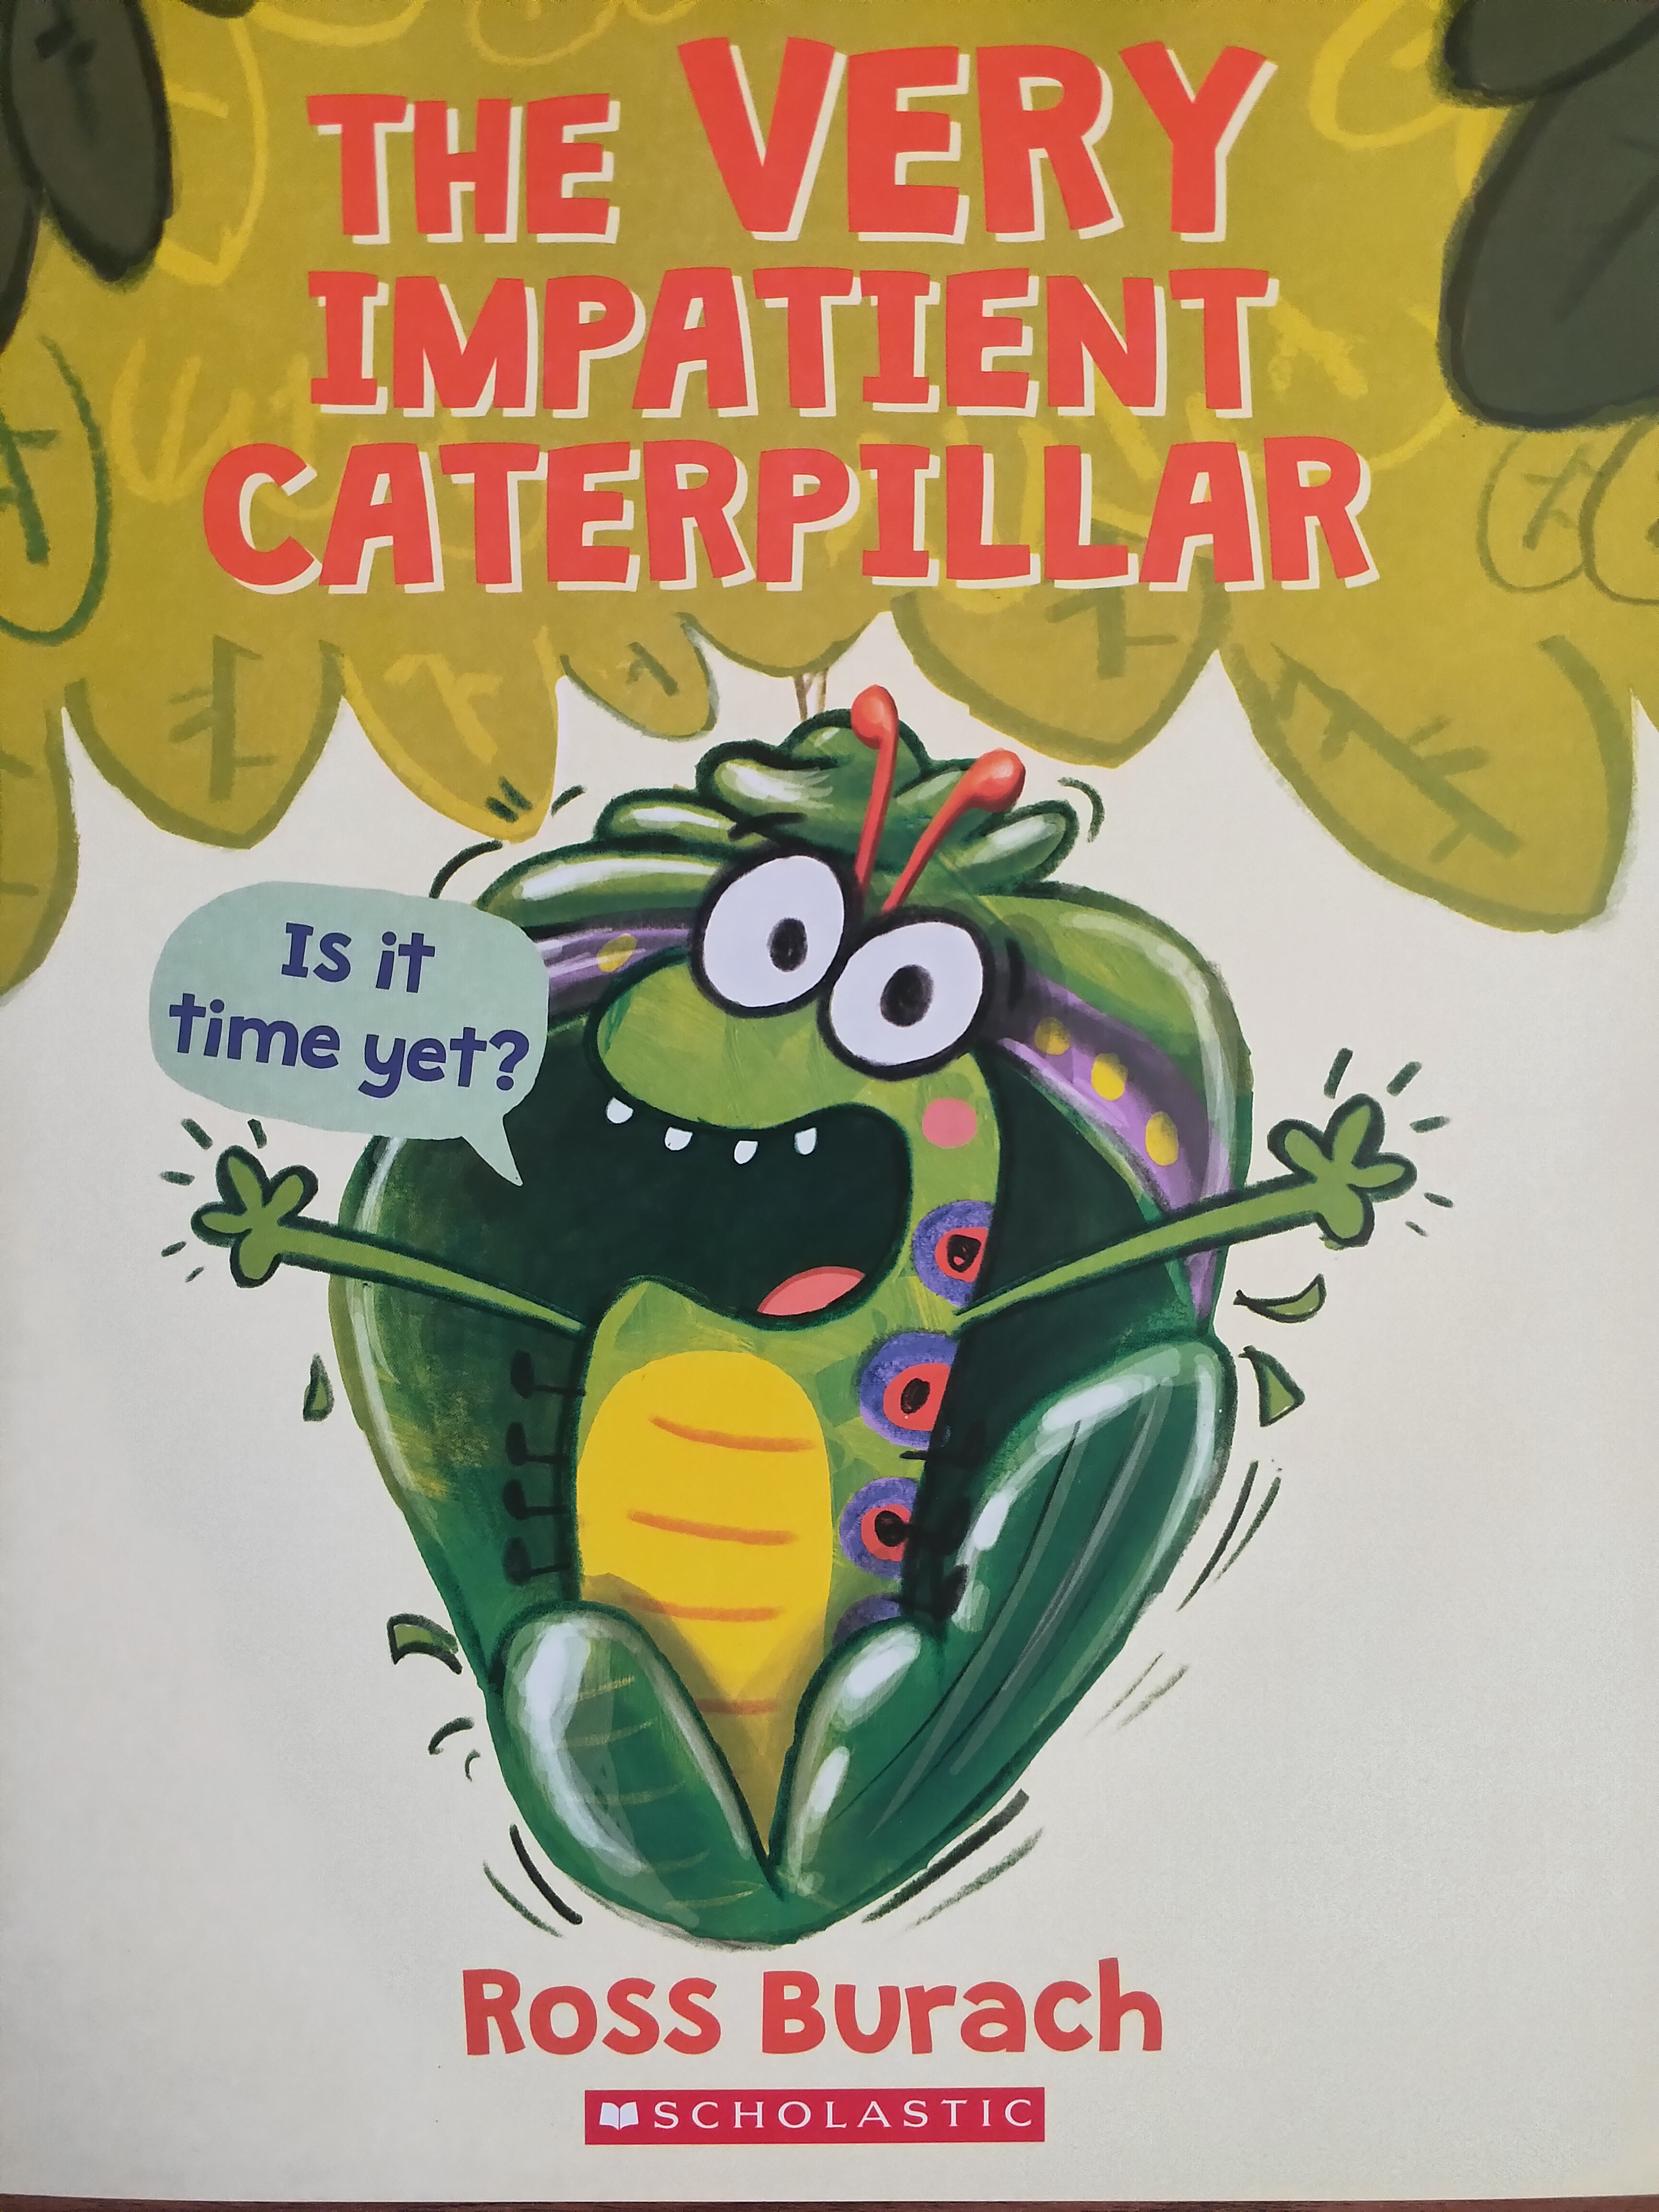 The very impatient caterpillar